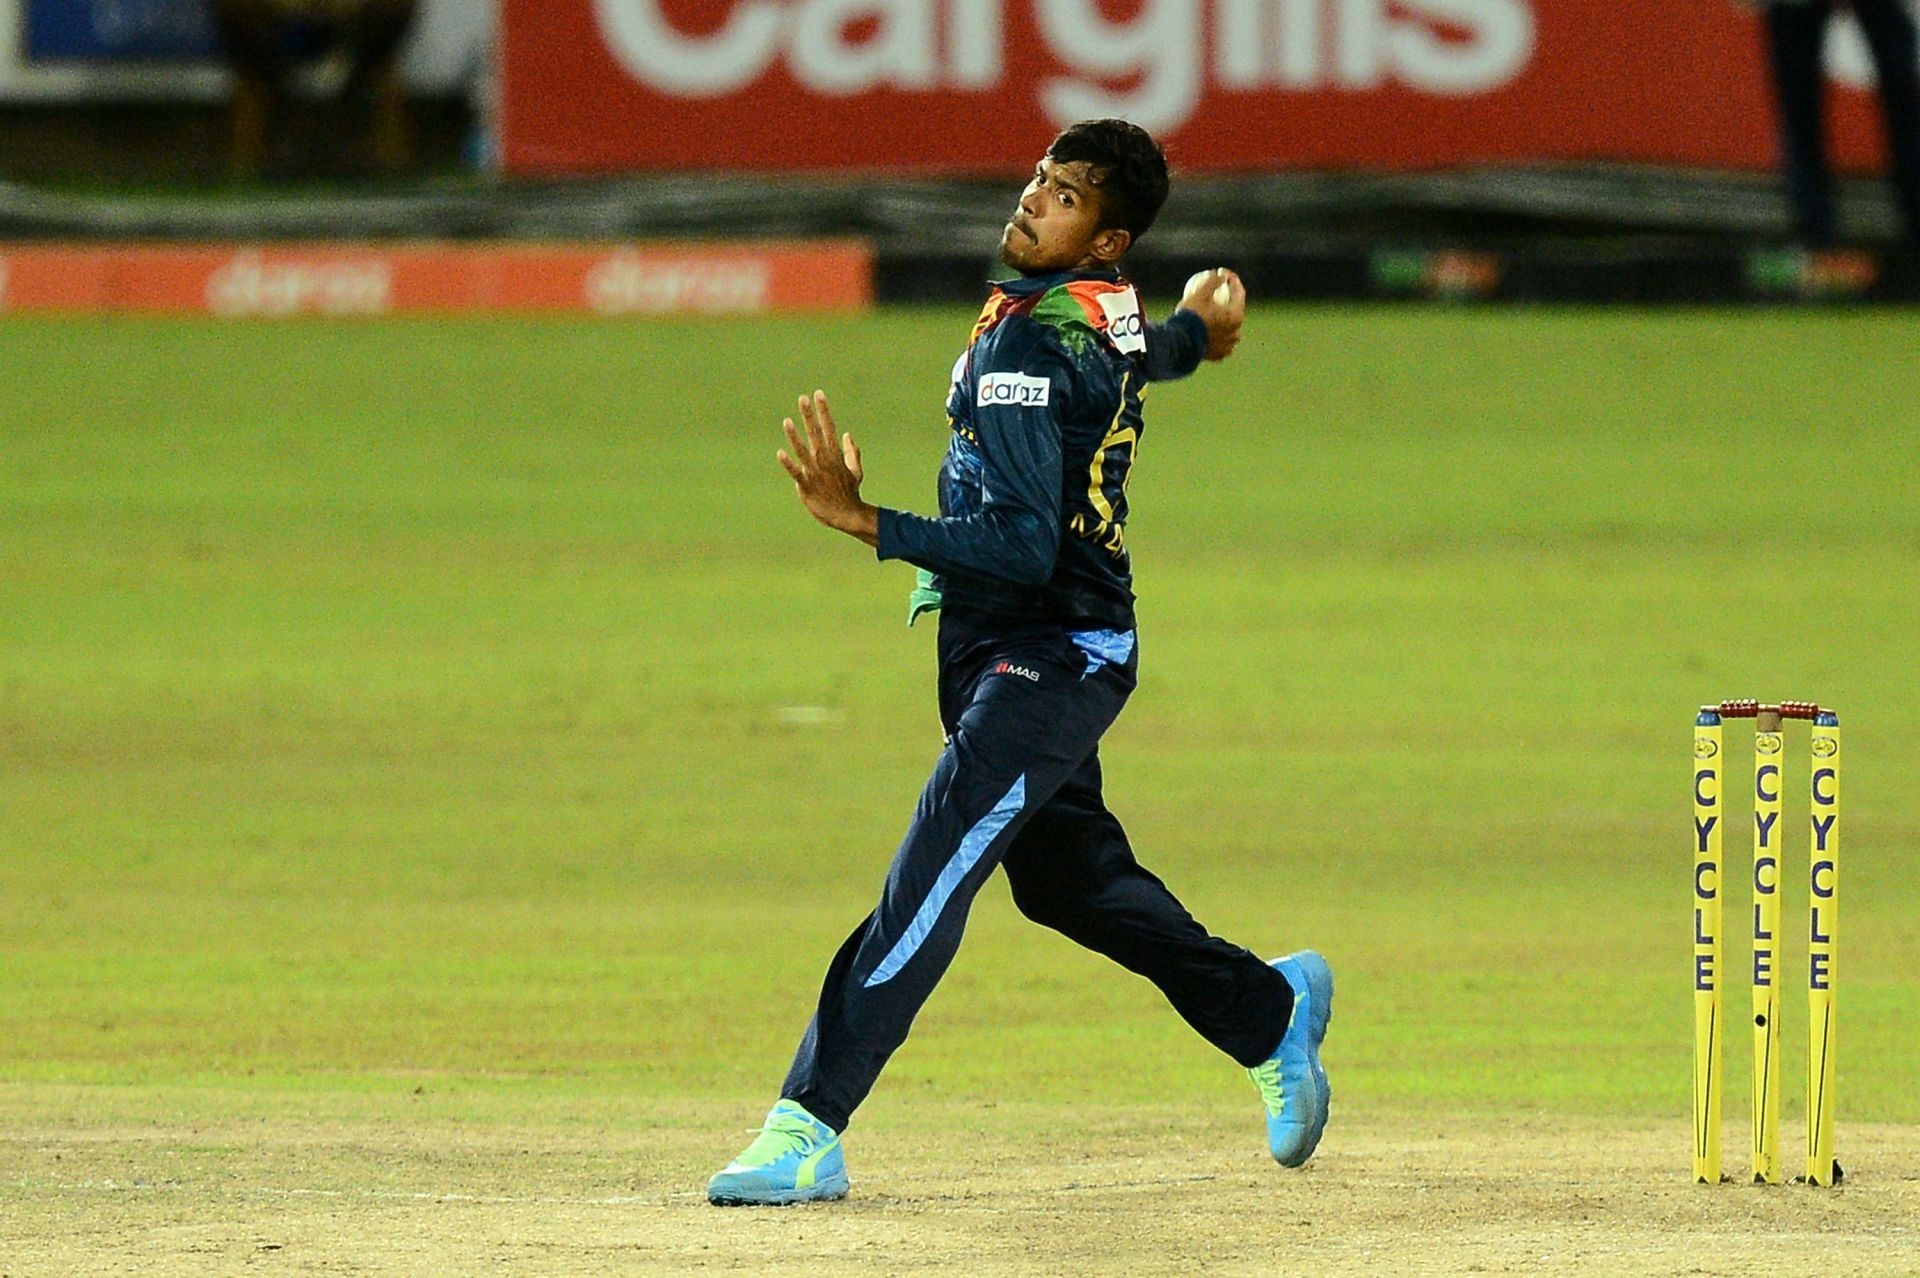 Aakash Chopra sees Maheesh Theekshana opening the bowling for Sri Lanka